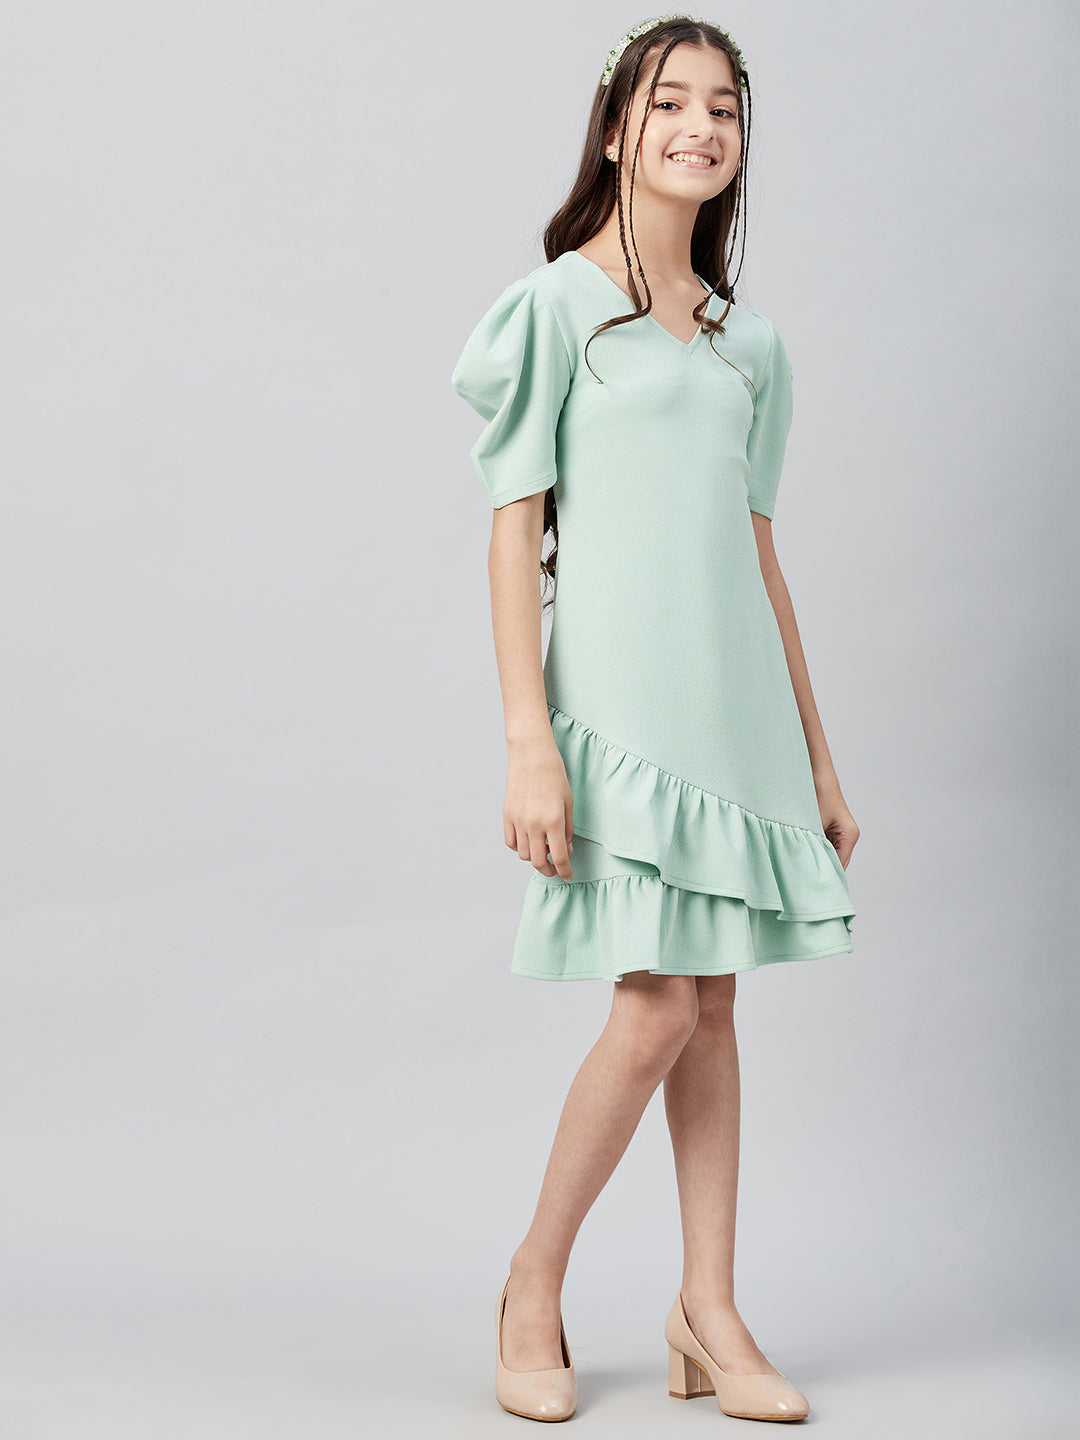 Athena Girl Green A-Line Dress - Athena Lifestyle